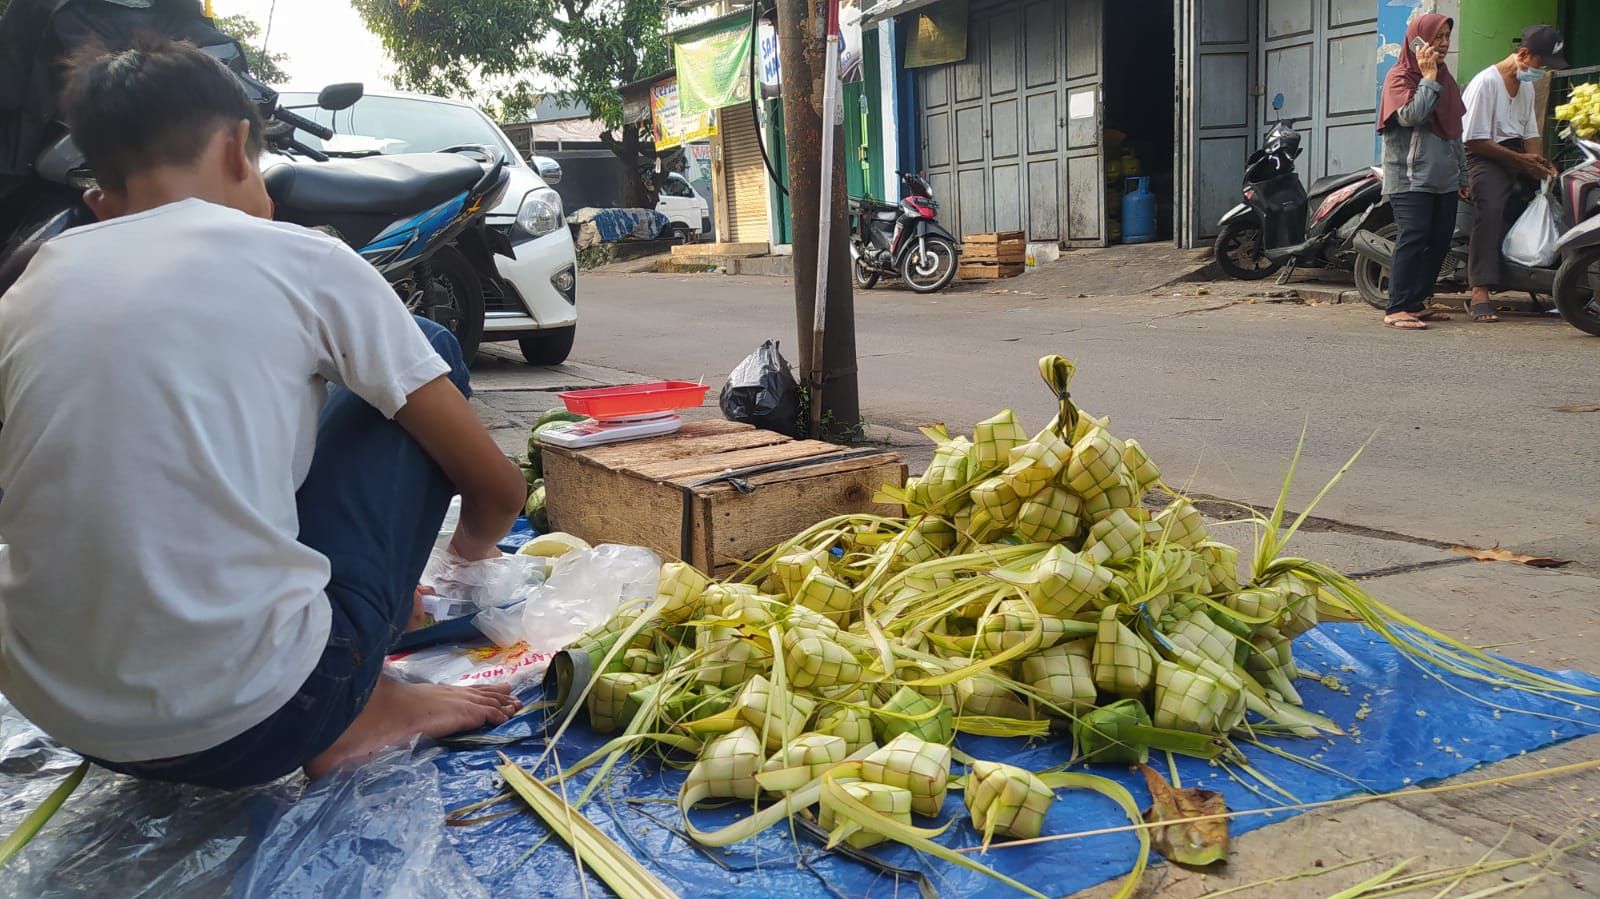 Pedagang musiman yang menjual ketupat untuk Hari Raya Idul Fitri sudah mulai ramai sejak Sabtu, 30 April 2022.